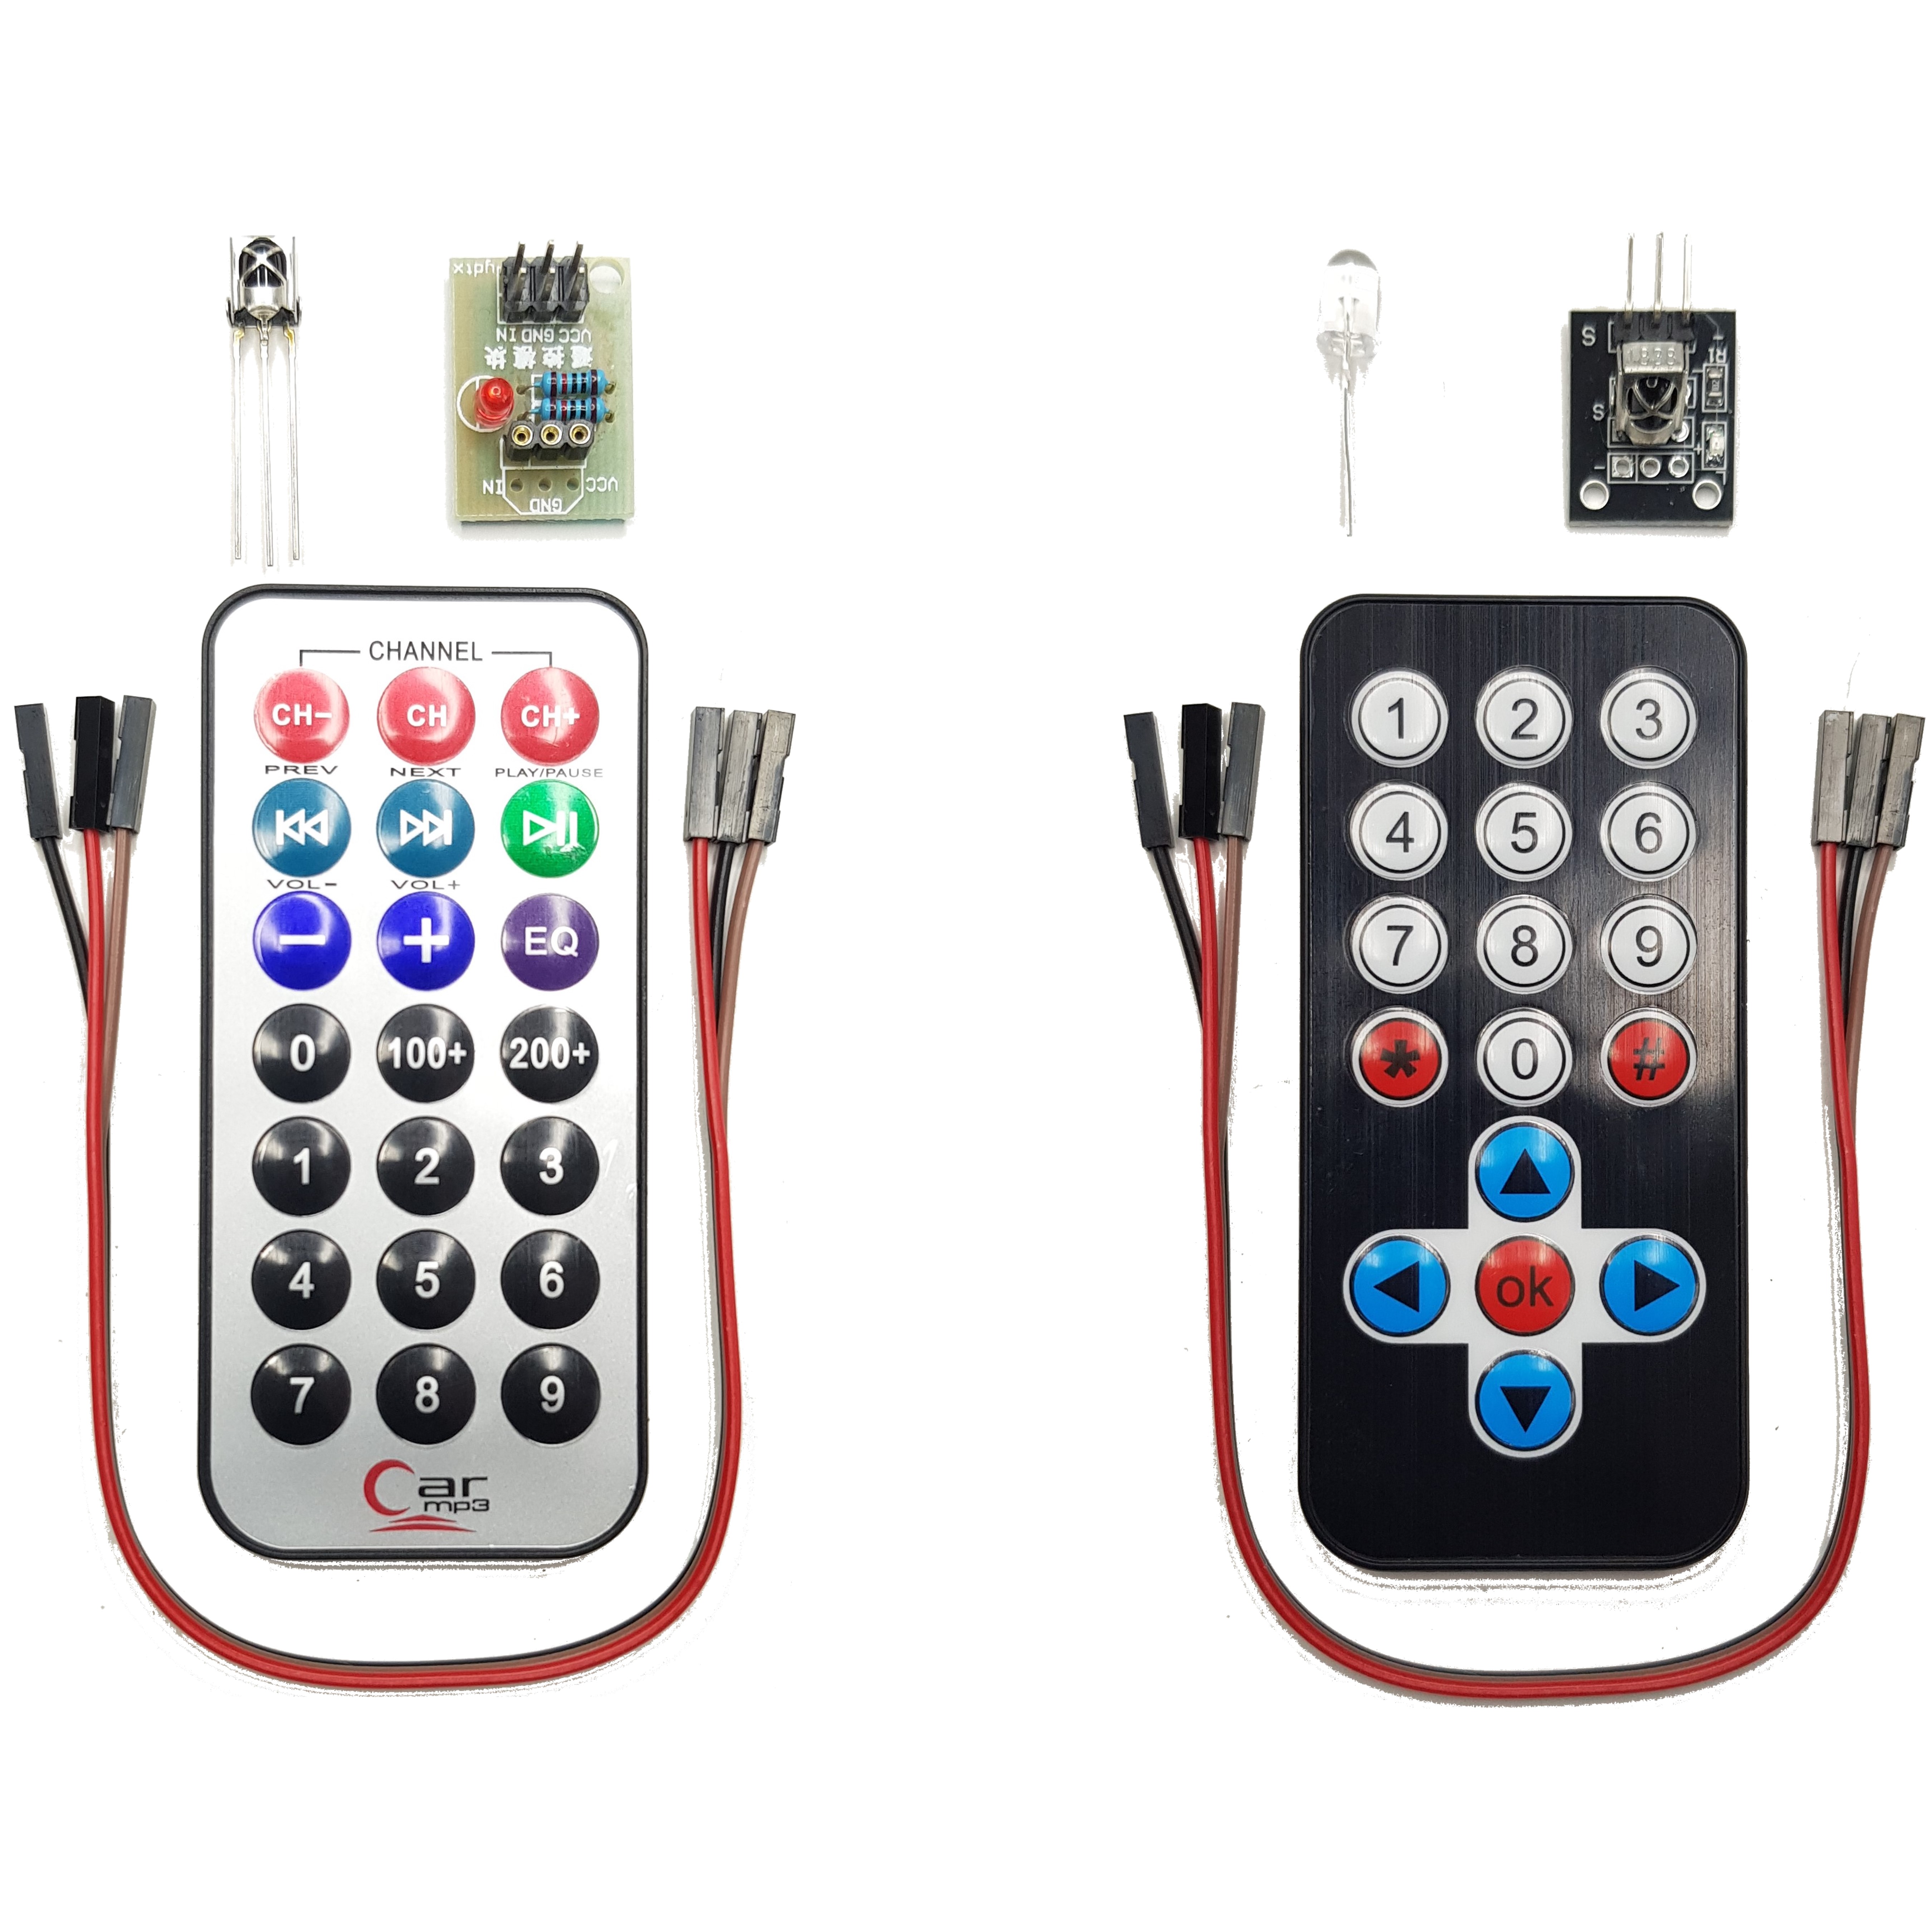 Infrared IR Remote Control Kits with Controller and Receiver for Arduino, ESP32, ESP8266, Raspberry Pi, 2 sets